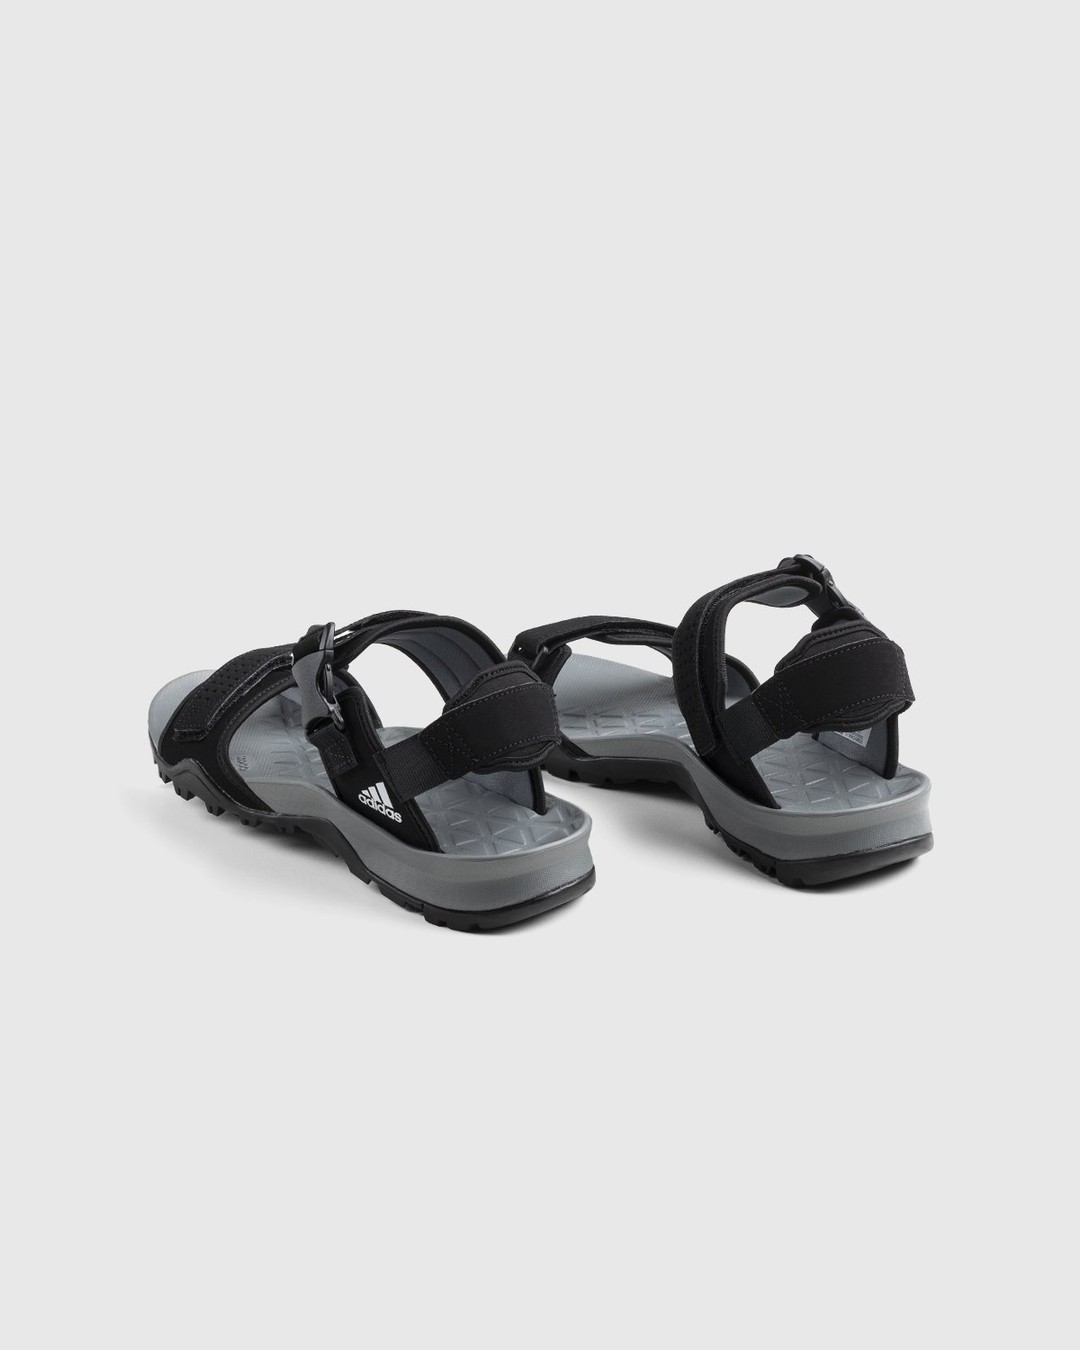 Adidas – Cyprex Ultra II Sandals Core Black Vista Grey Cloud White - Sandals - Black - Image 4